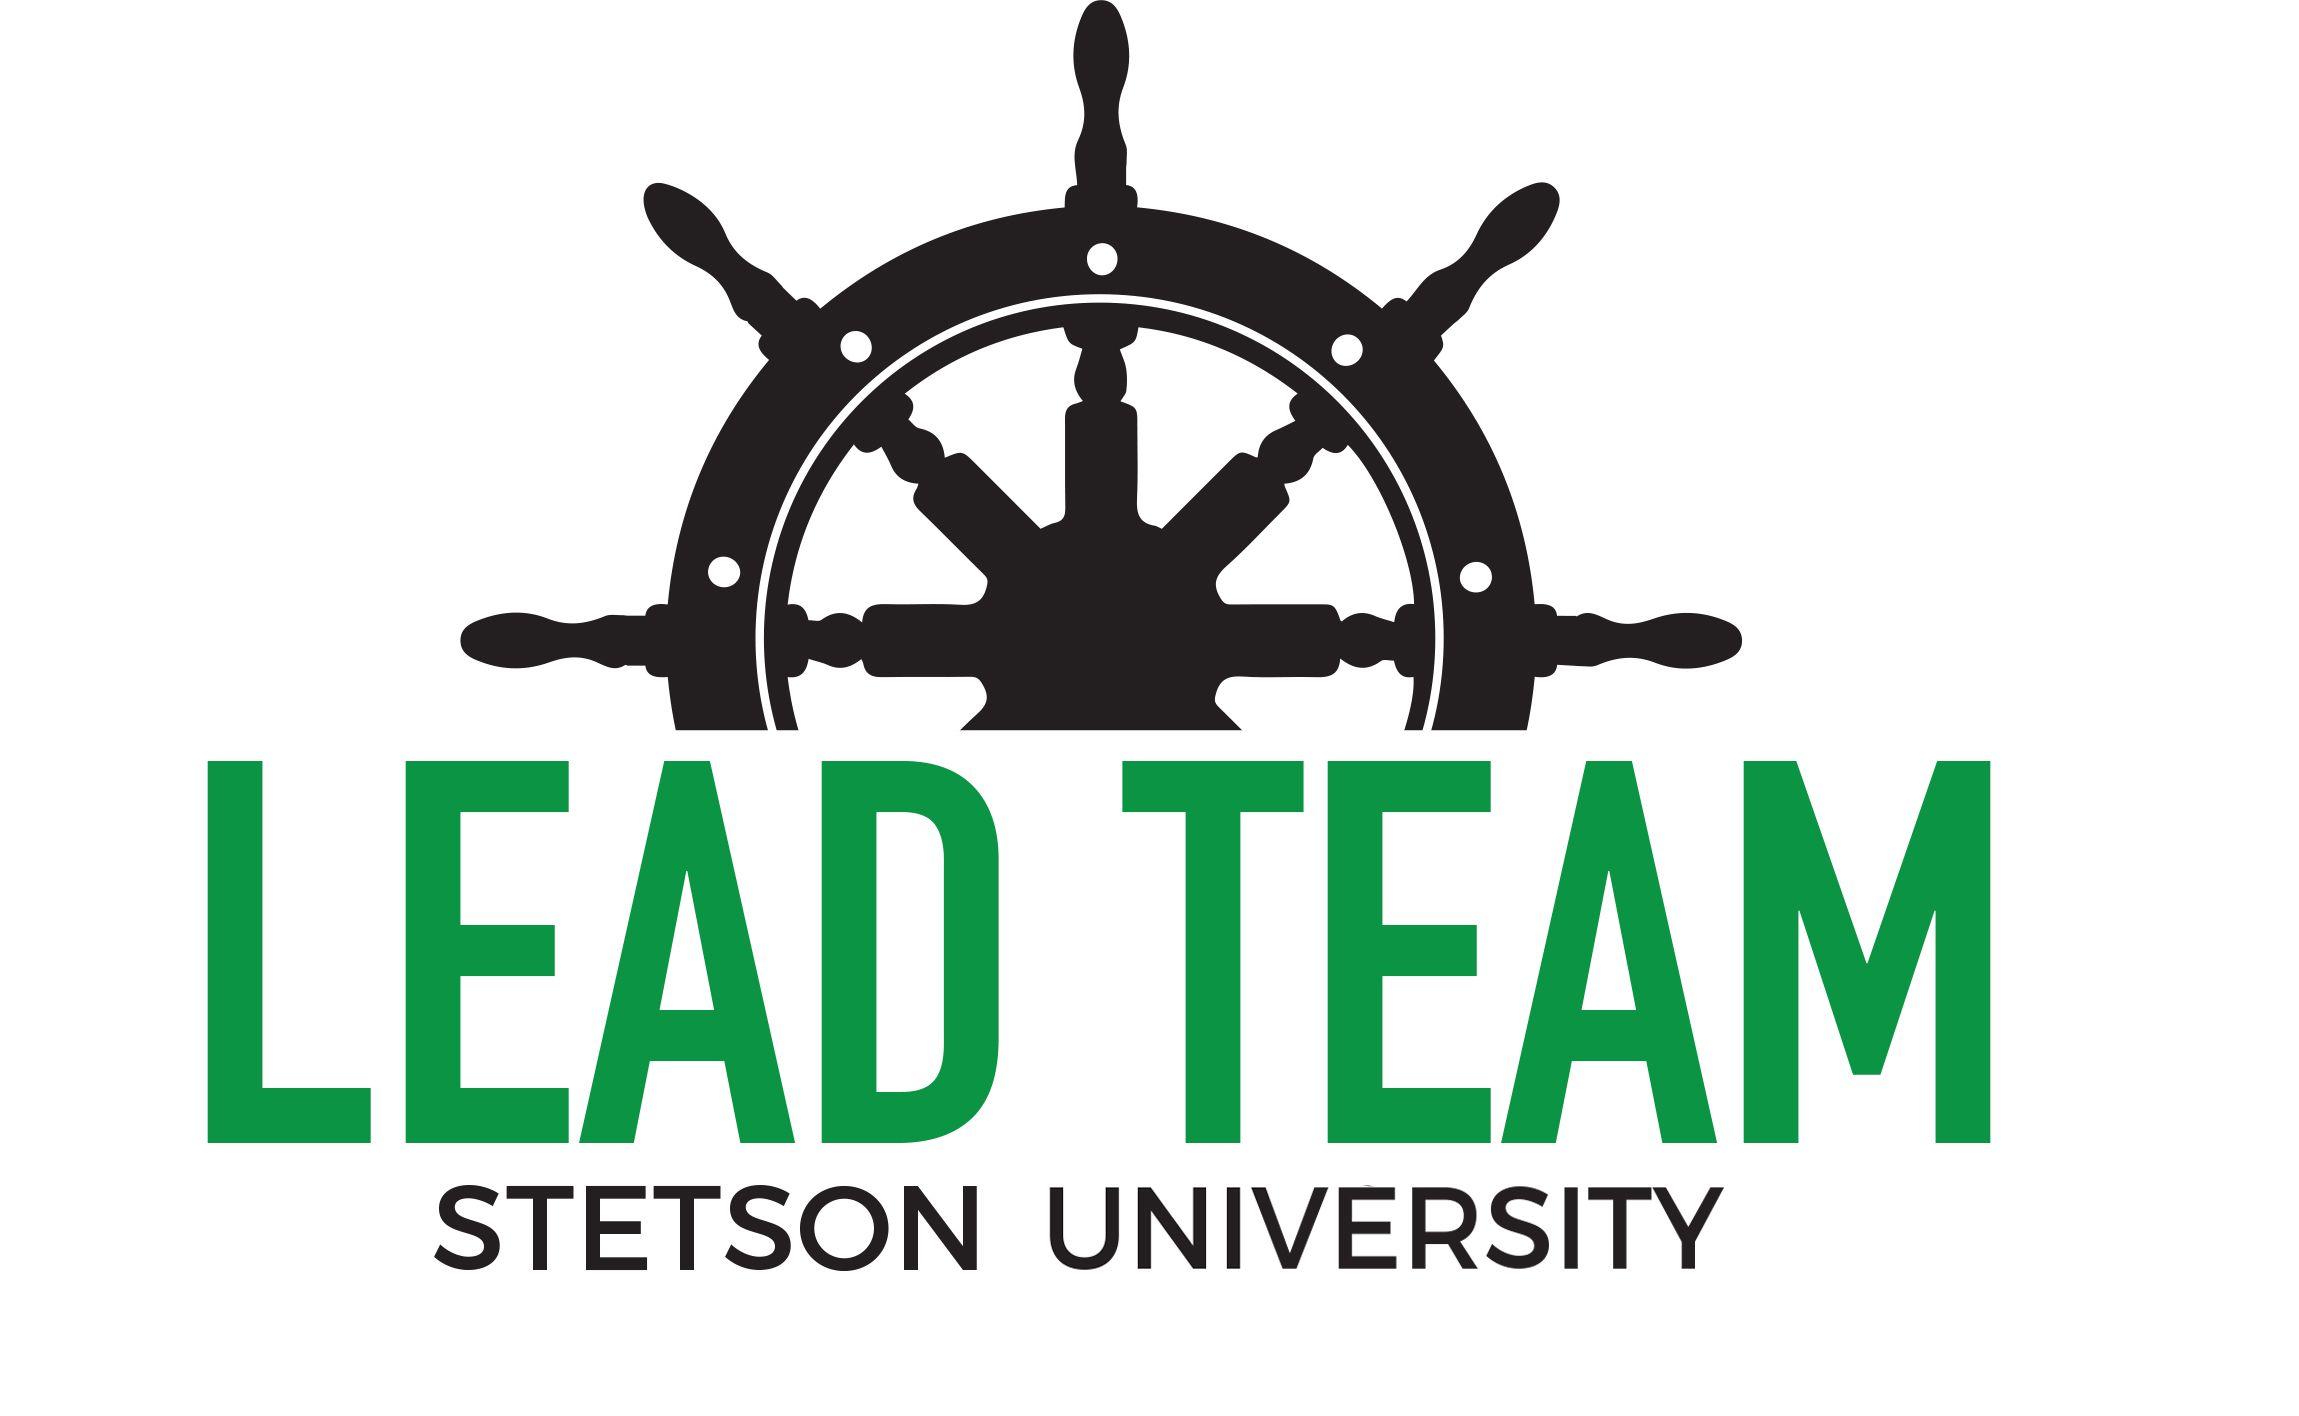 Stetson Logo - Leadership Development Development and Campus Vibrancy